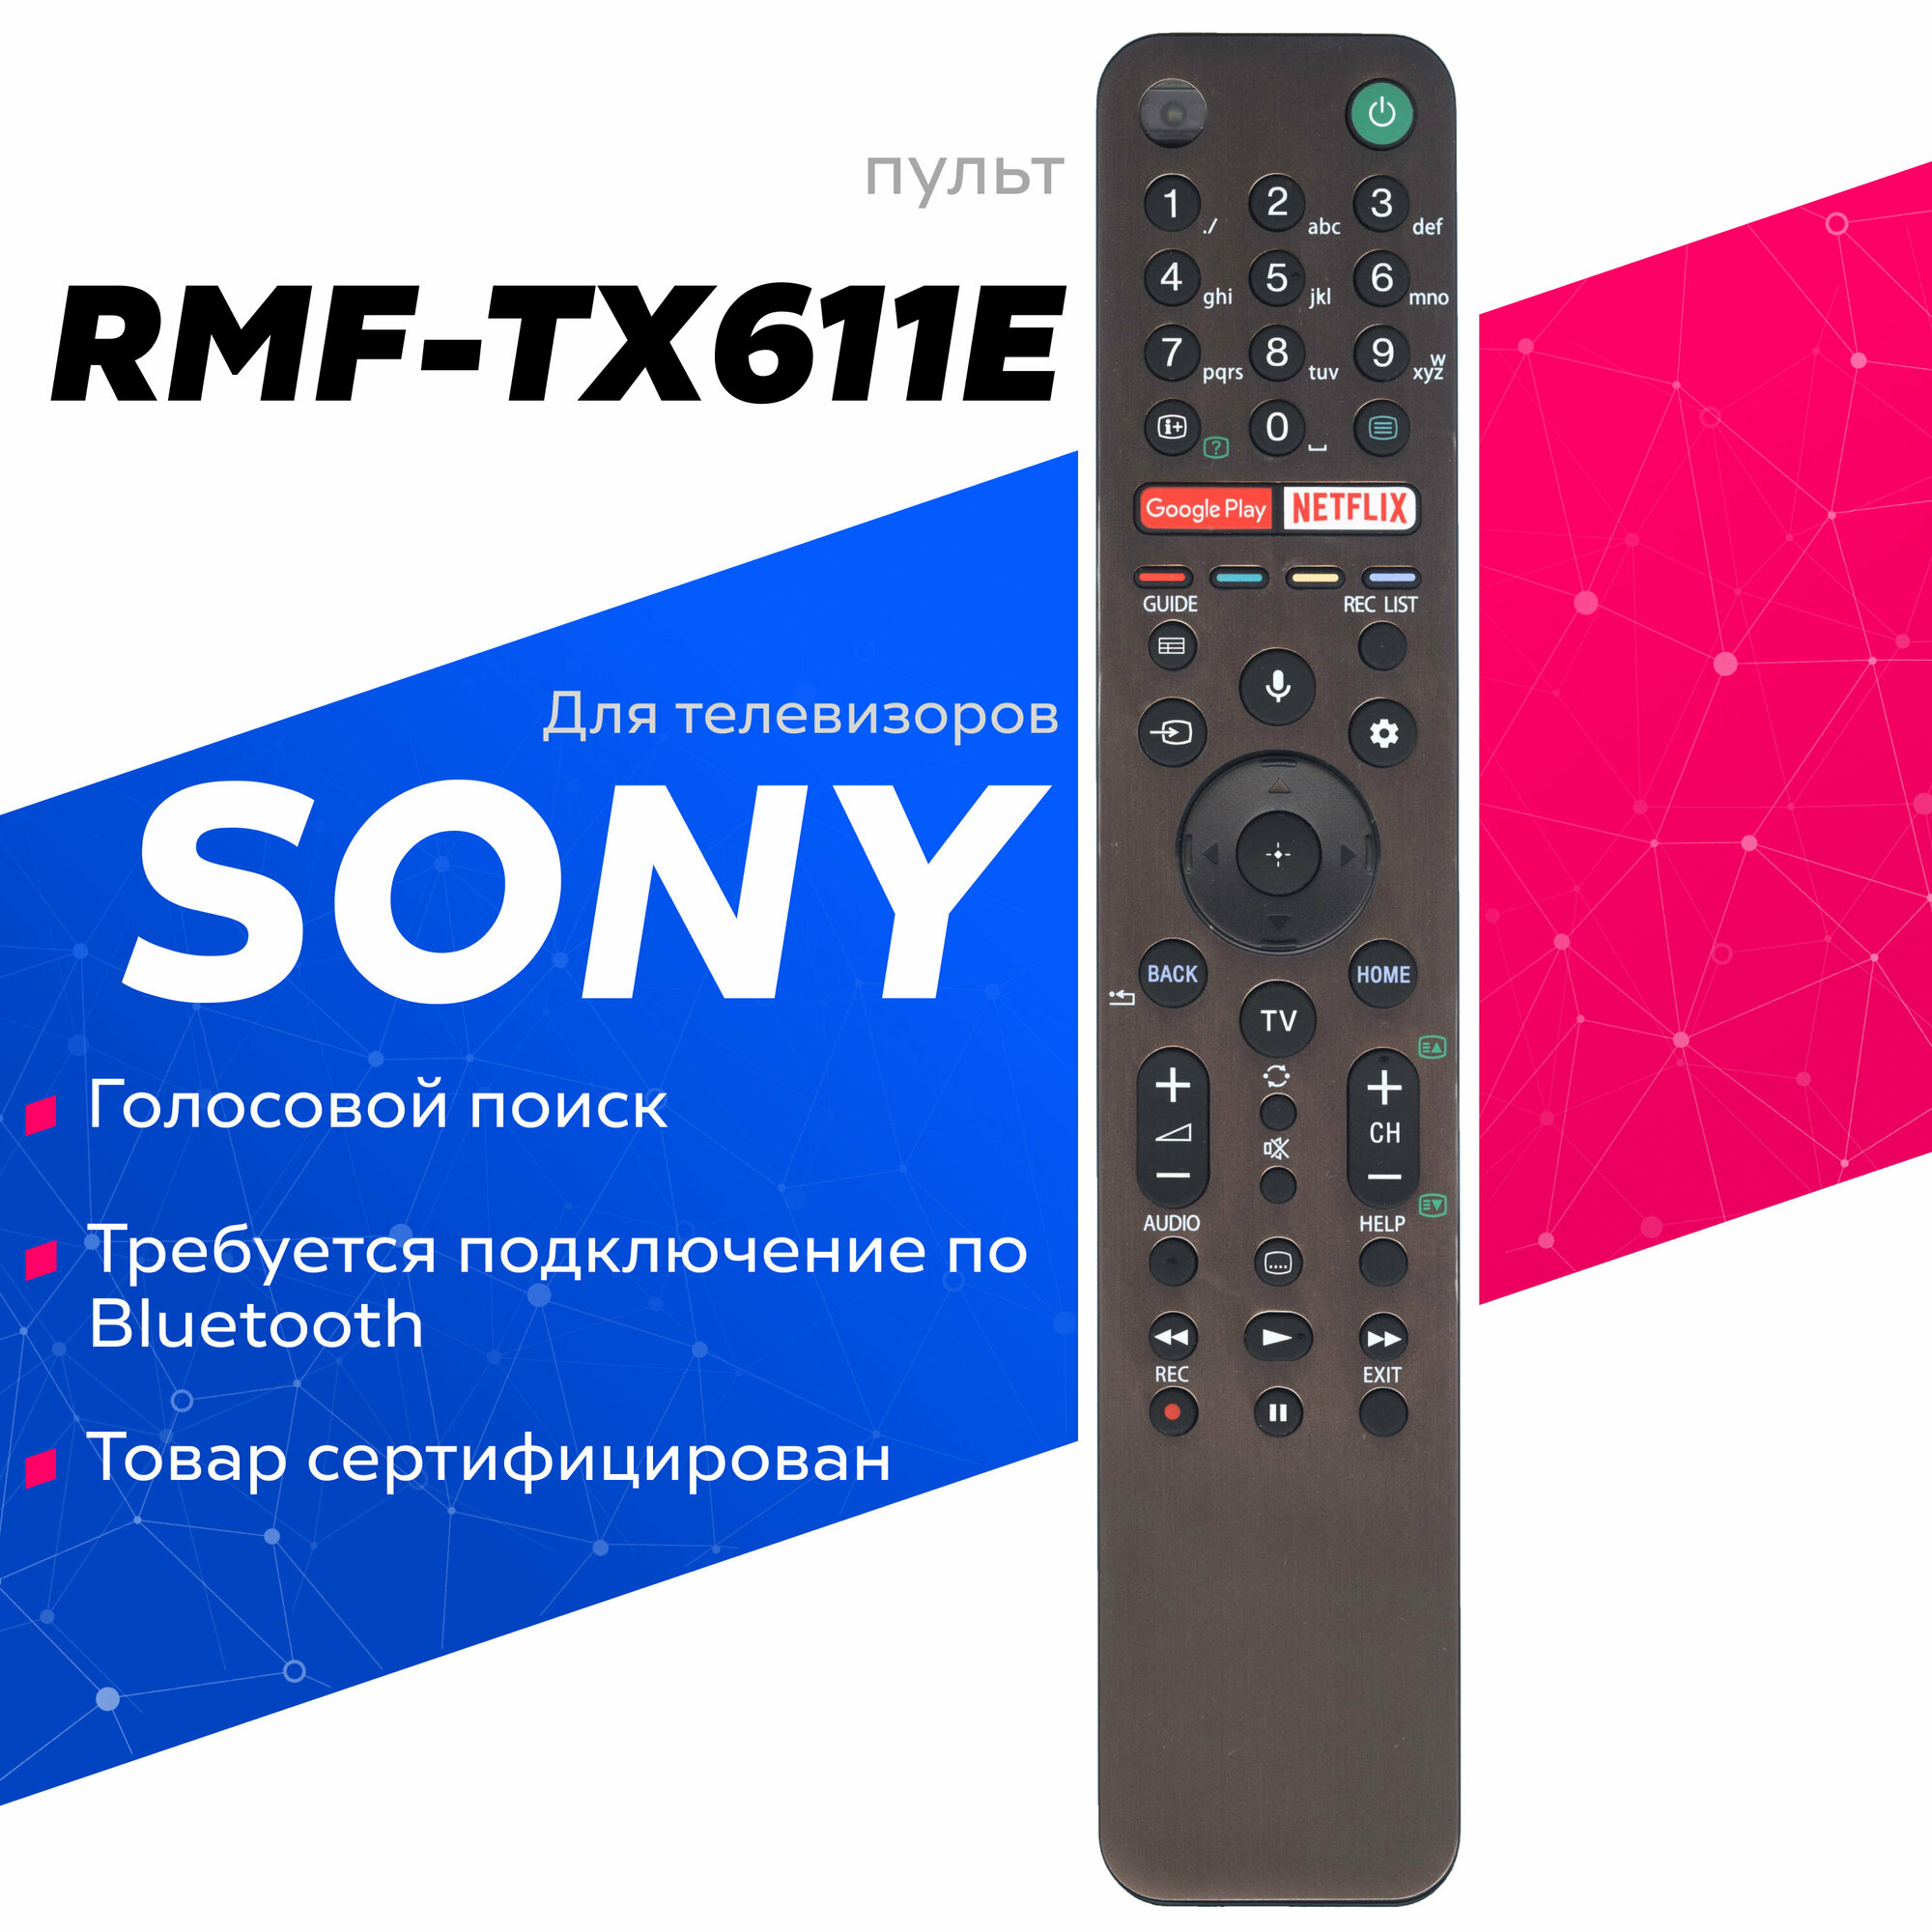 Голосовой пульт RMF-TX611E для телевизоров SONY / сони